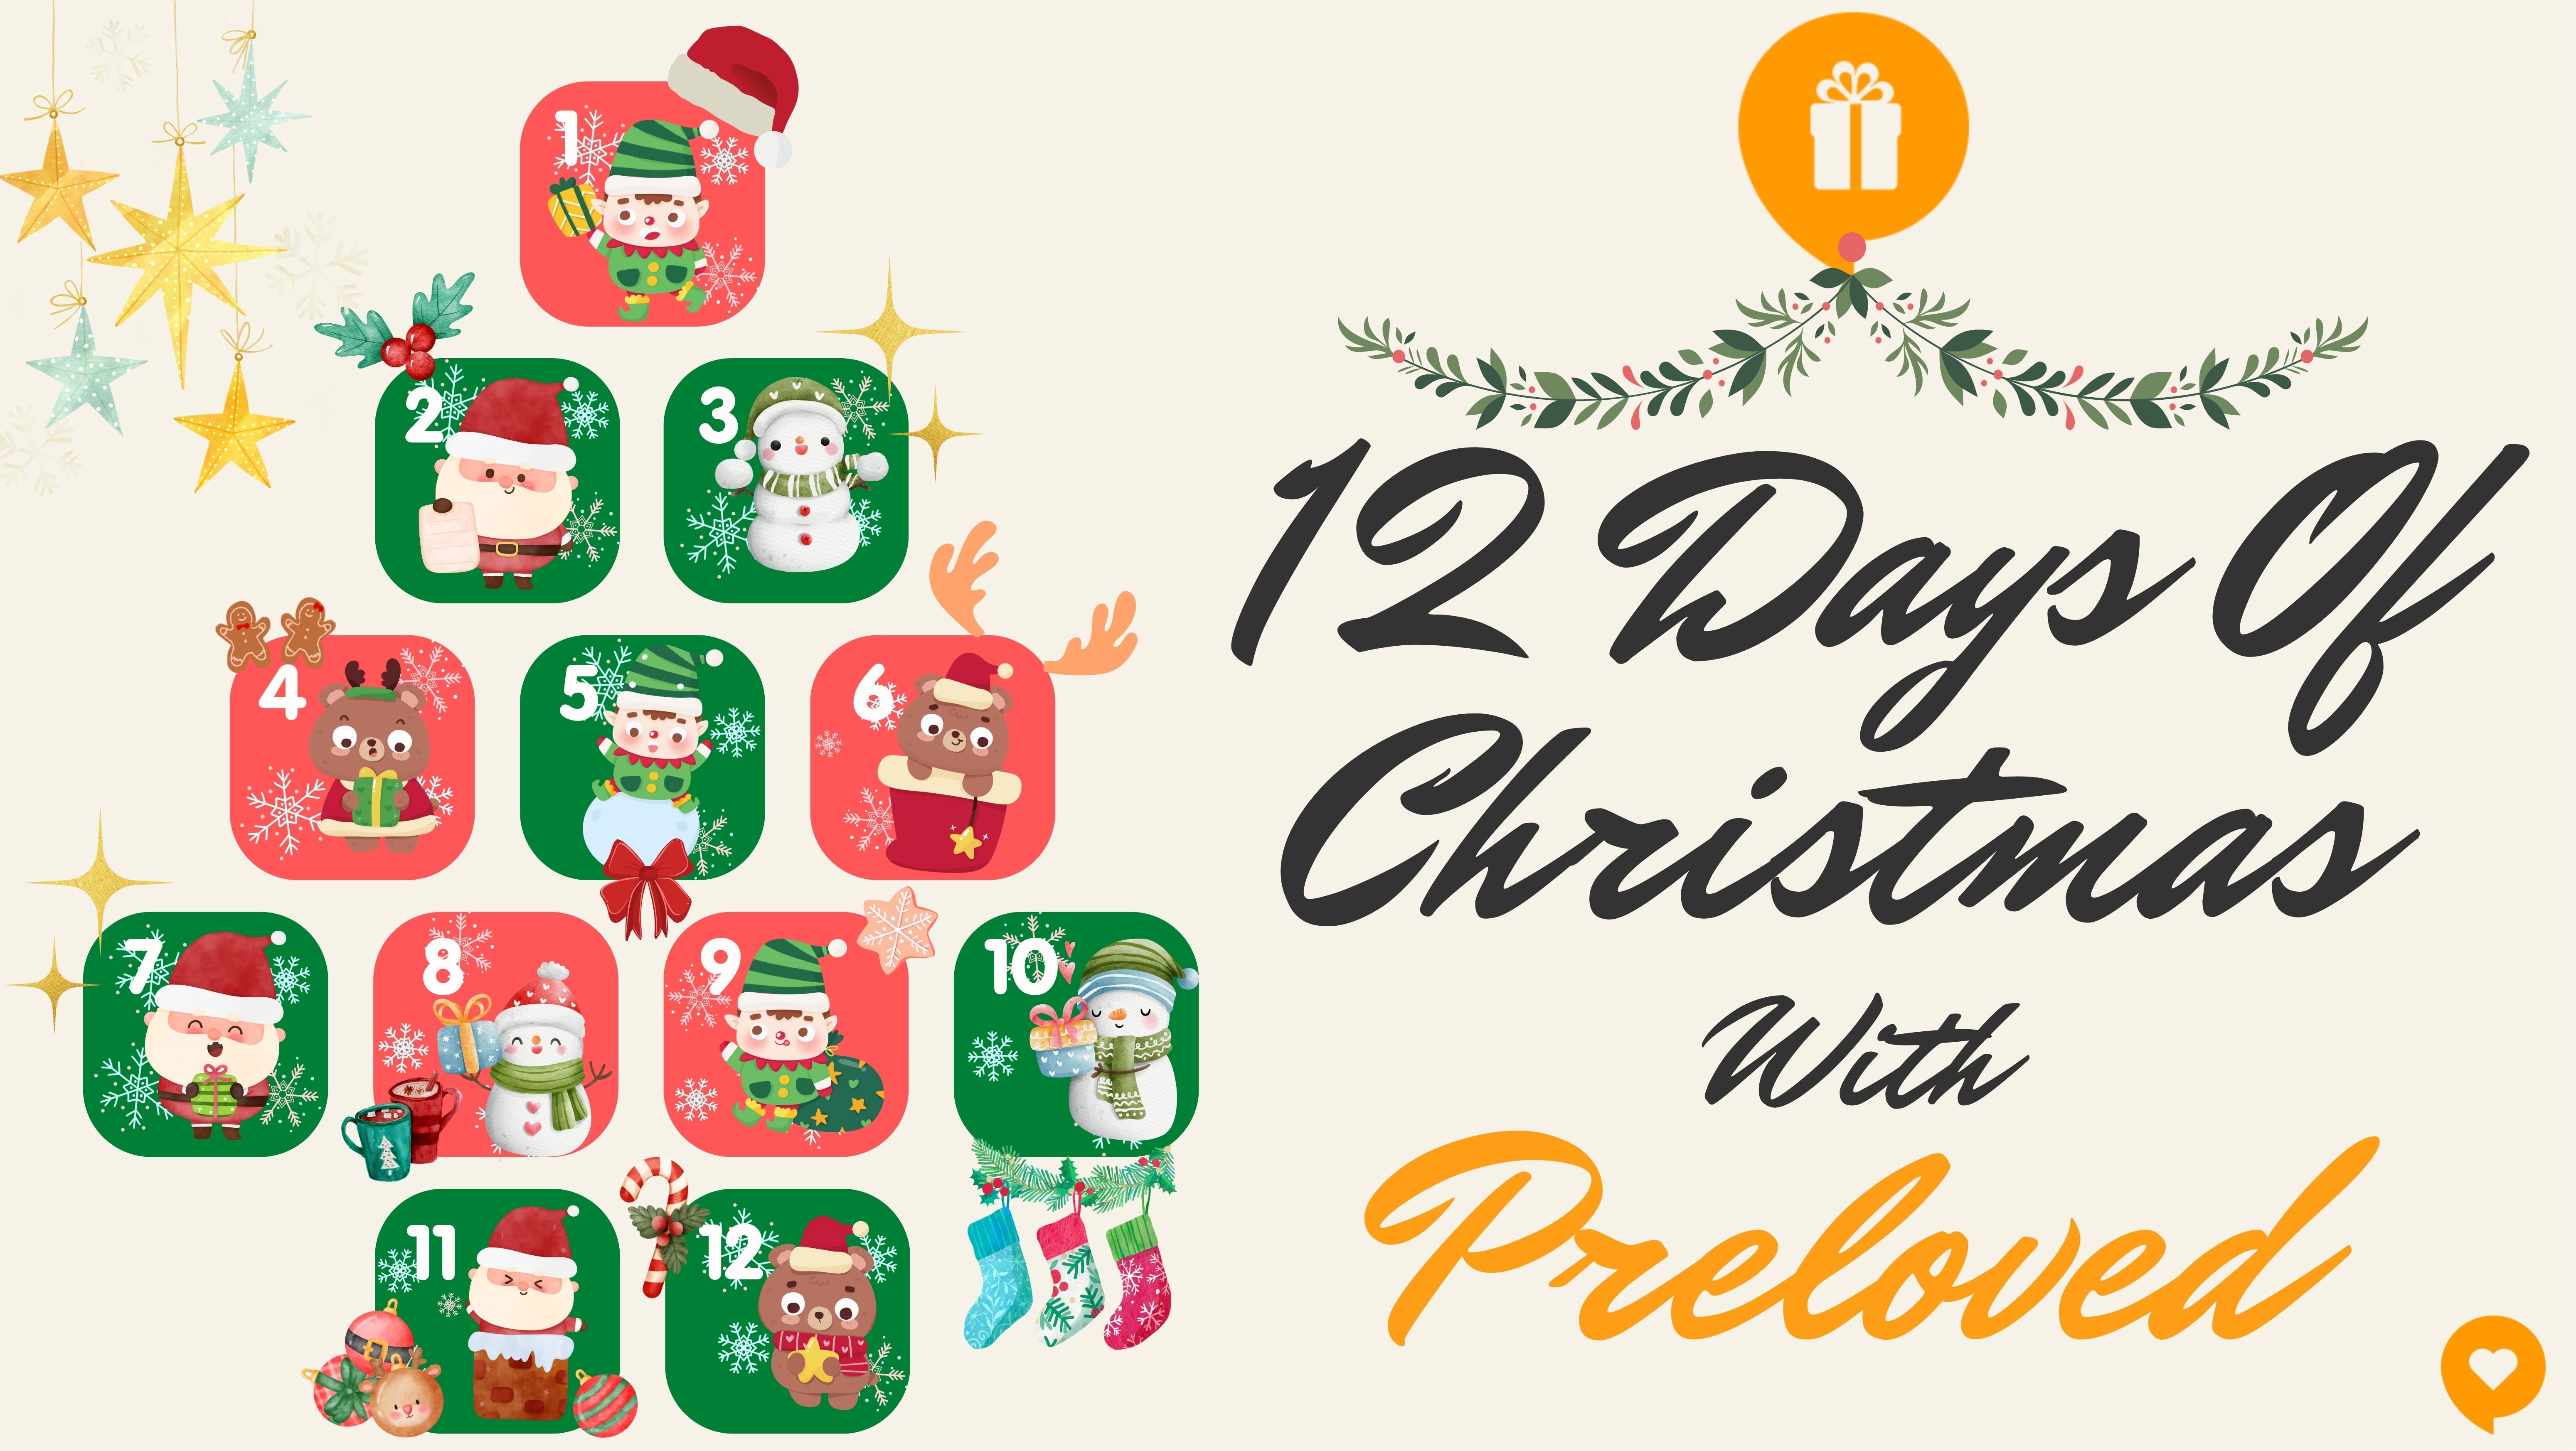 Preloved s 12 Days Of Christmas Giveaway Preloved UK